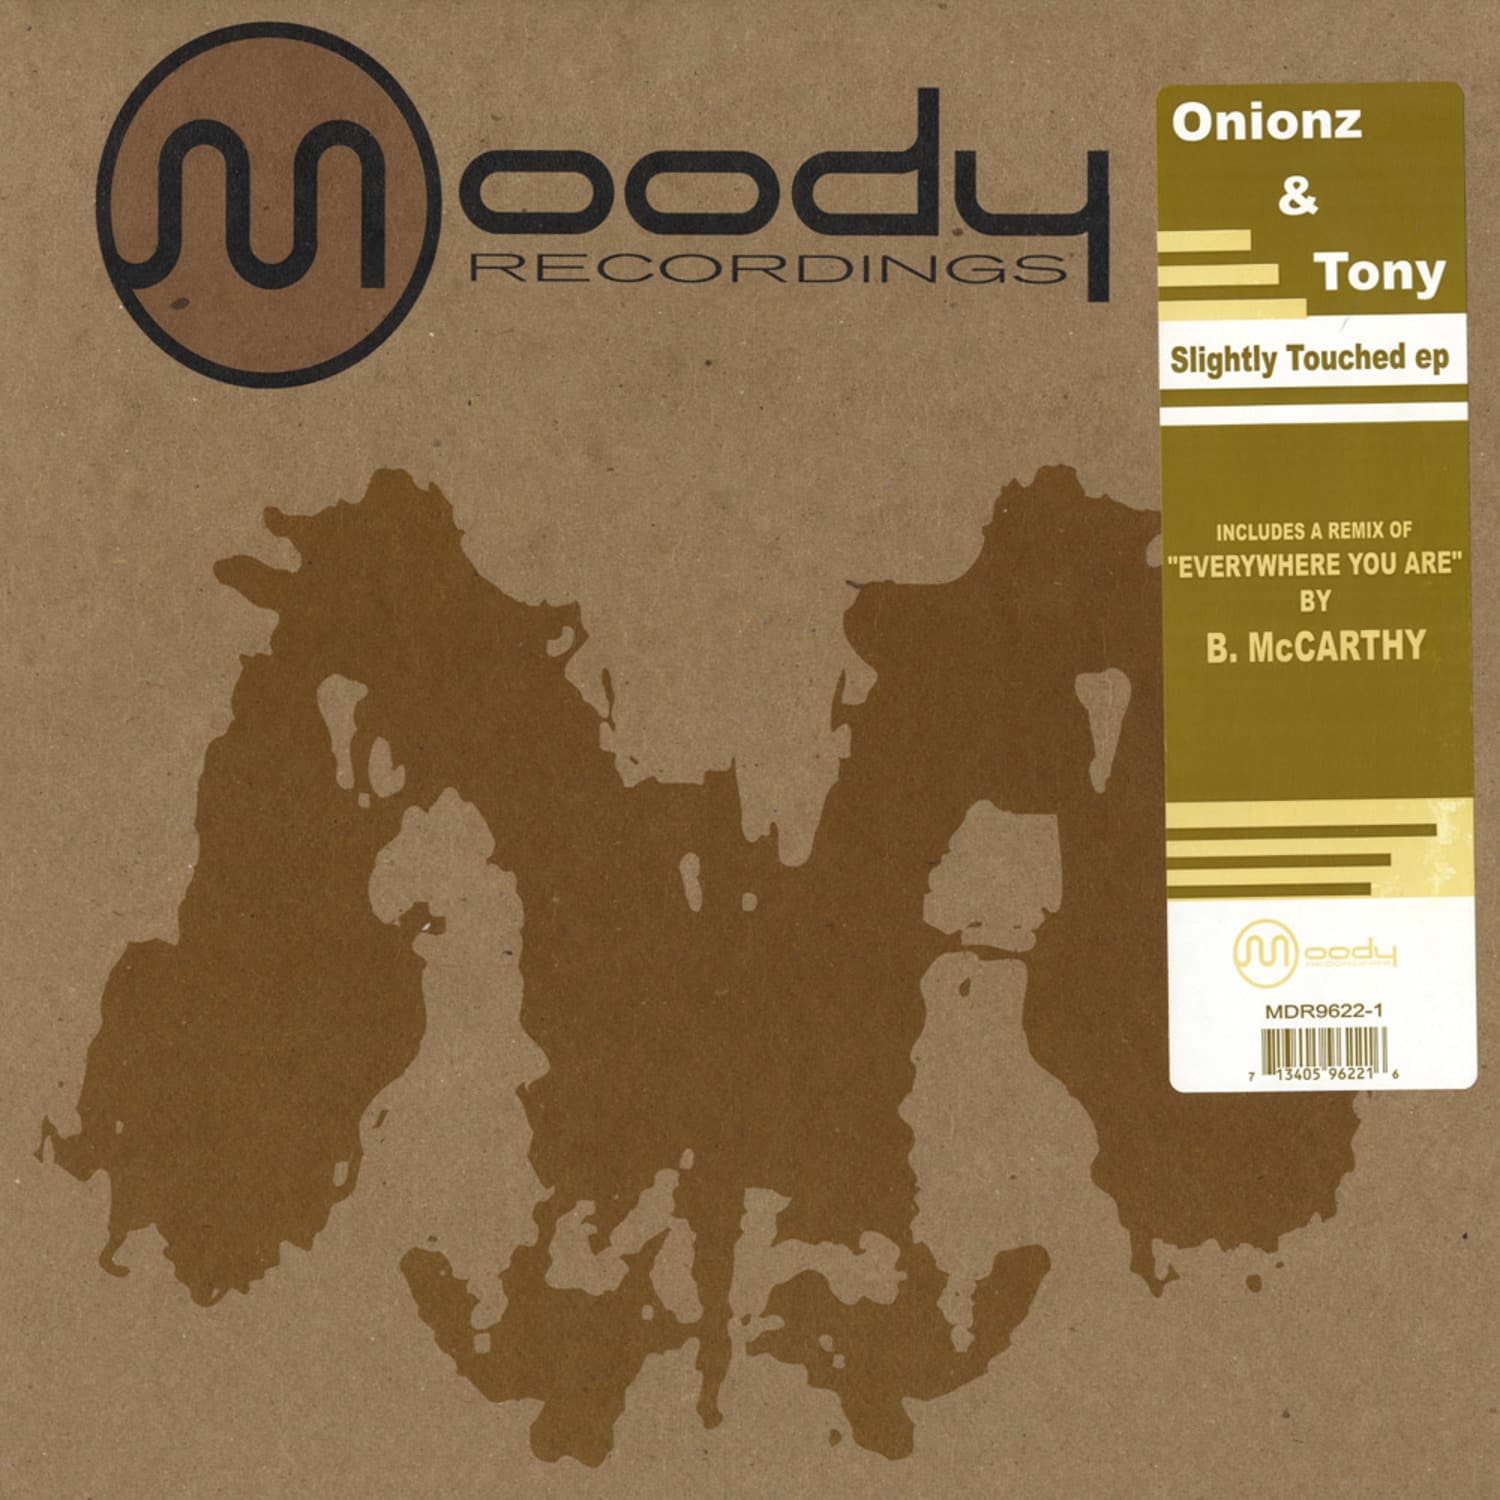 Onionz & Tony - SLIGHTLY TOUCHED EP